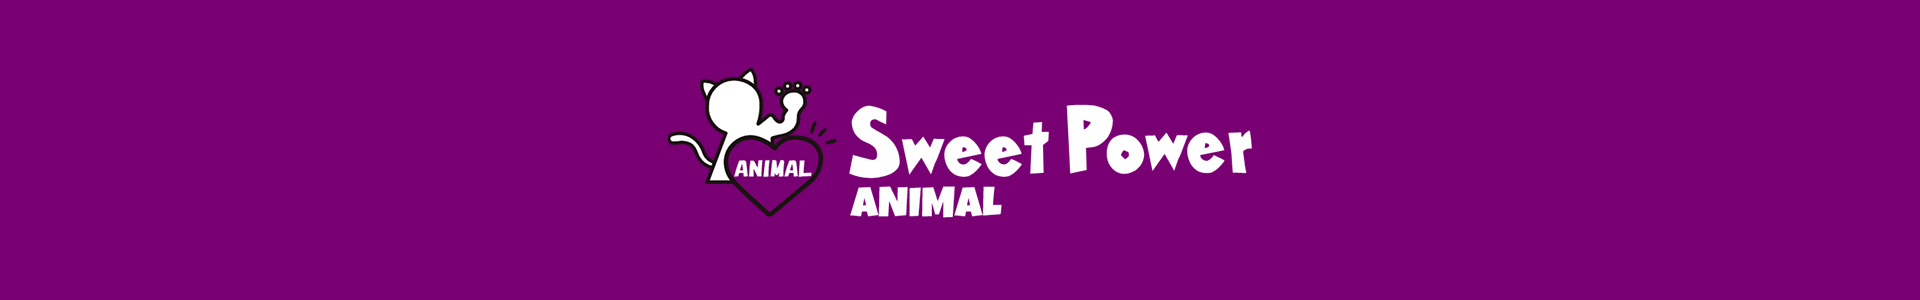 sweetpower animal